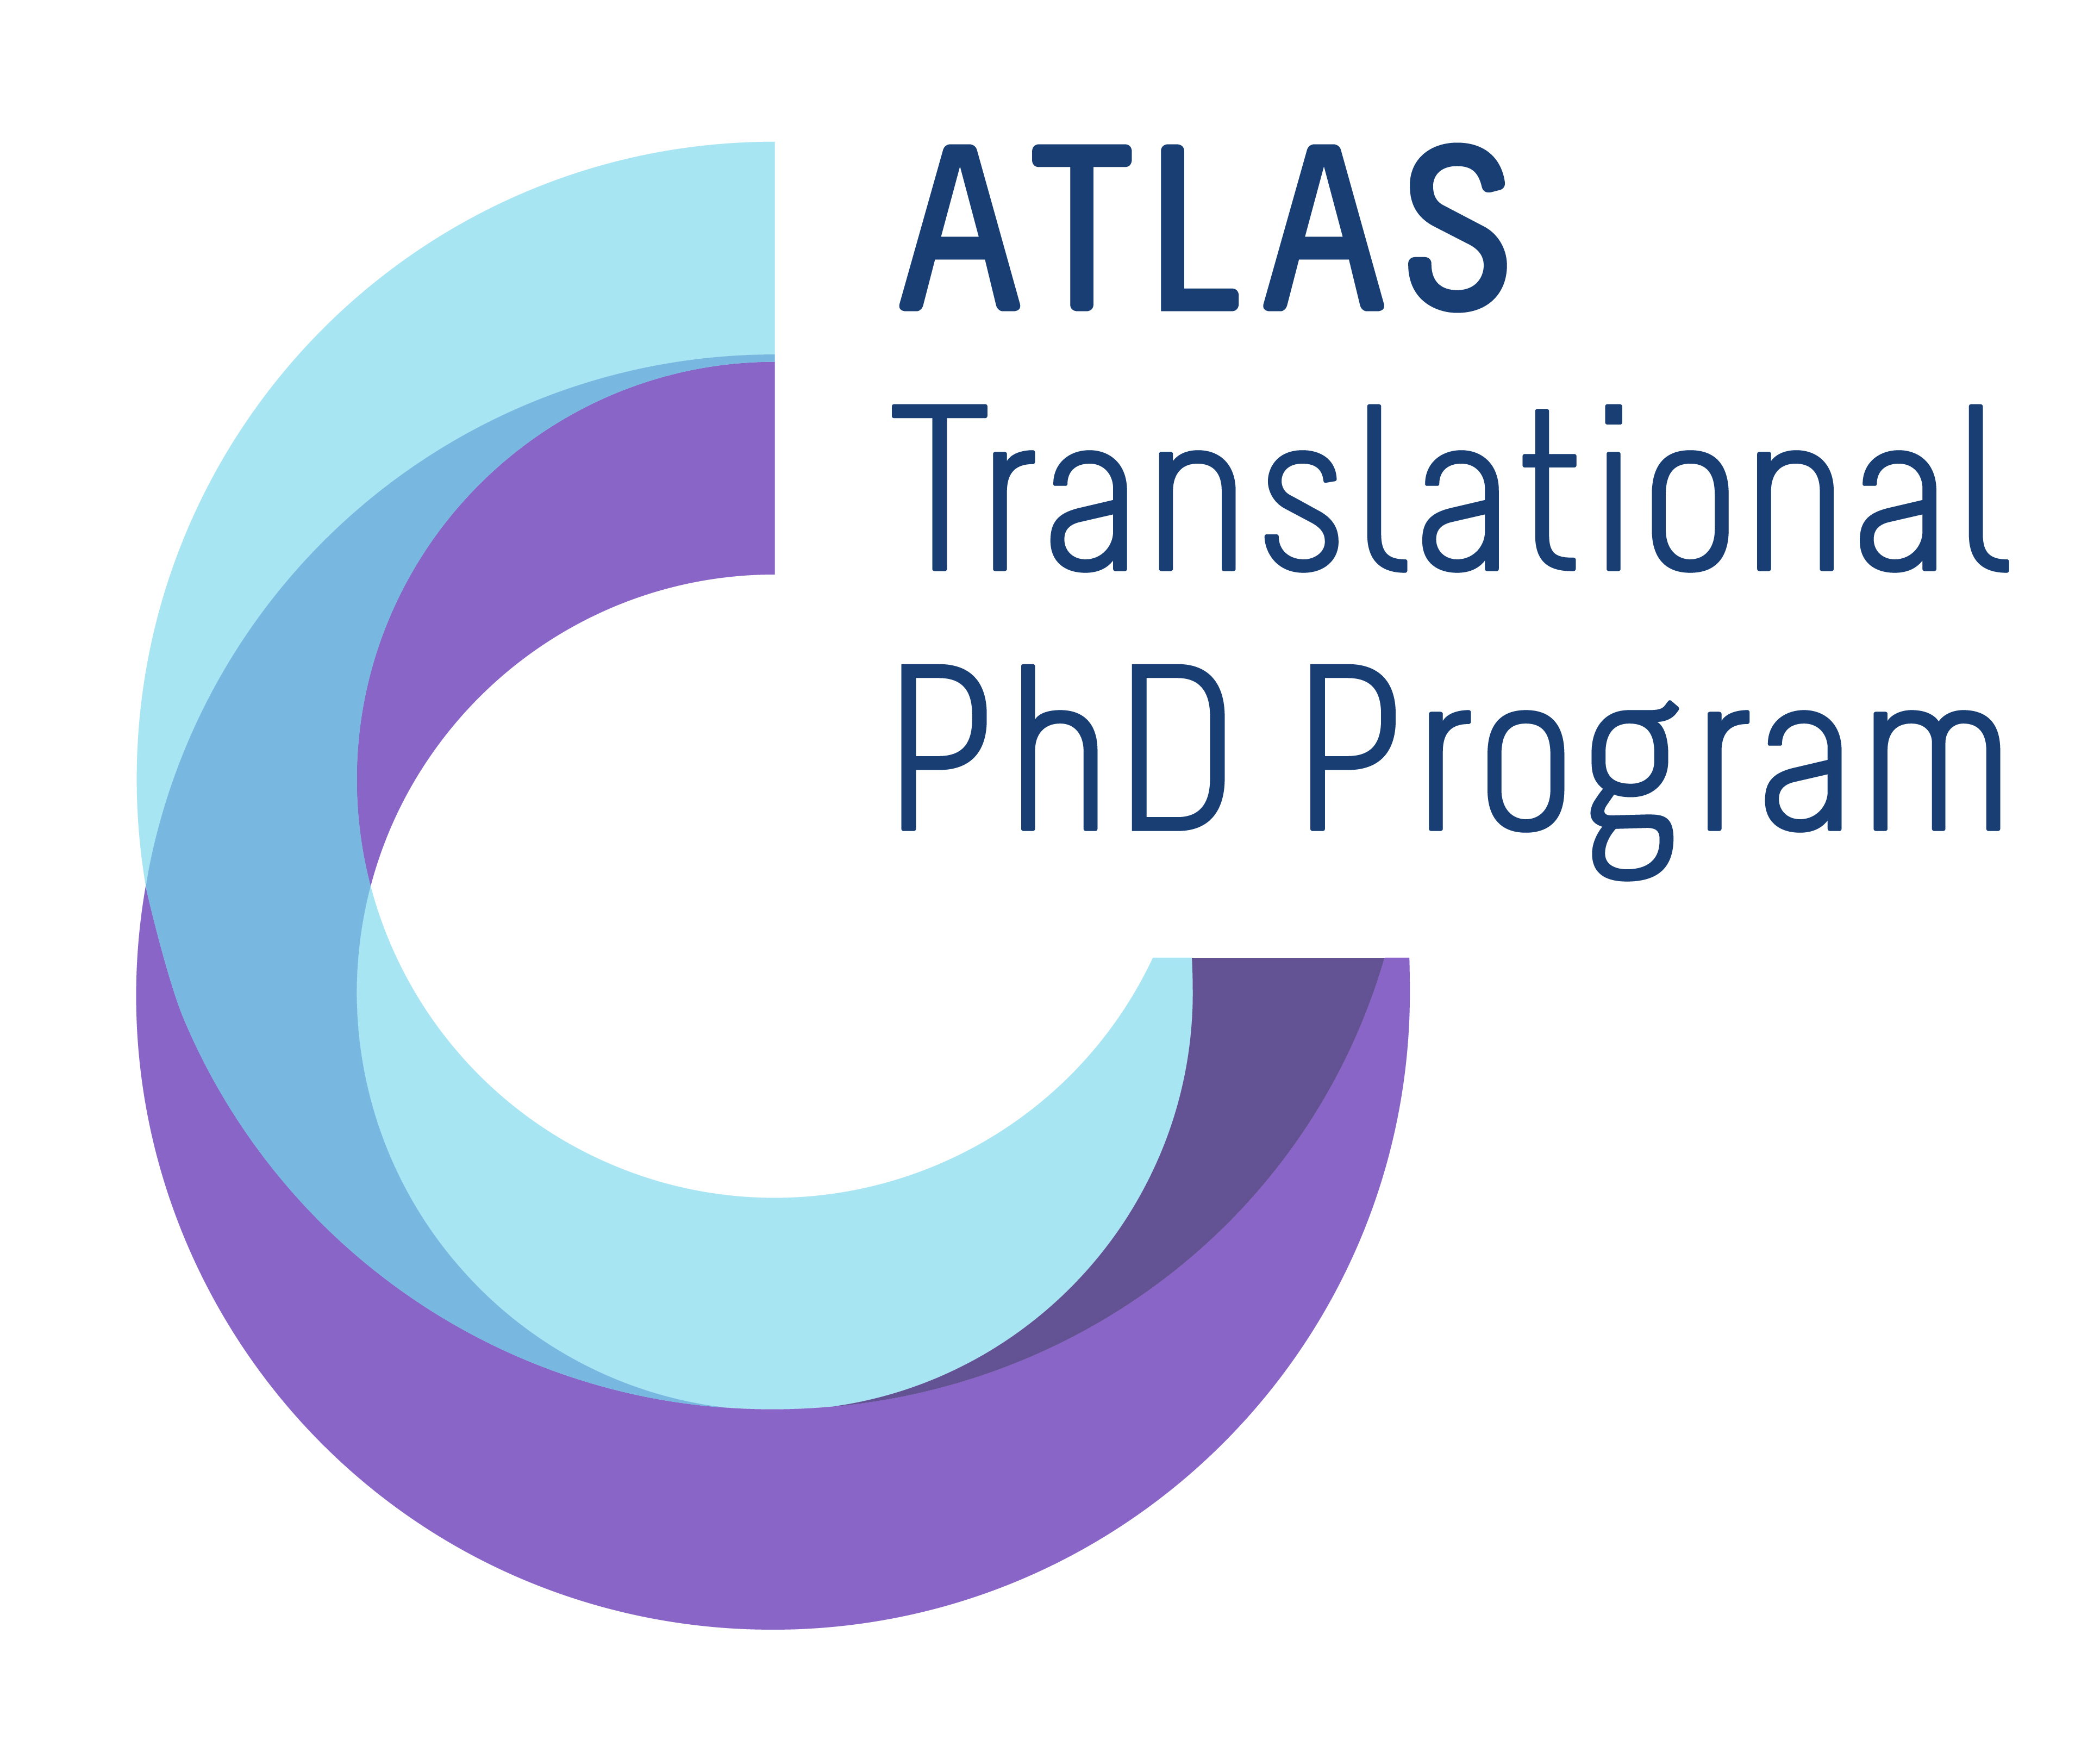 Atlas Translational PhD Program